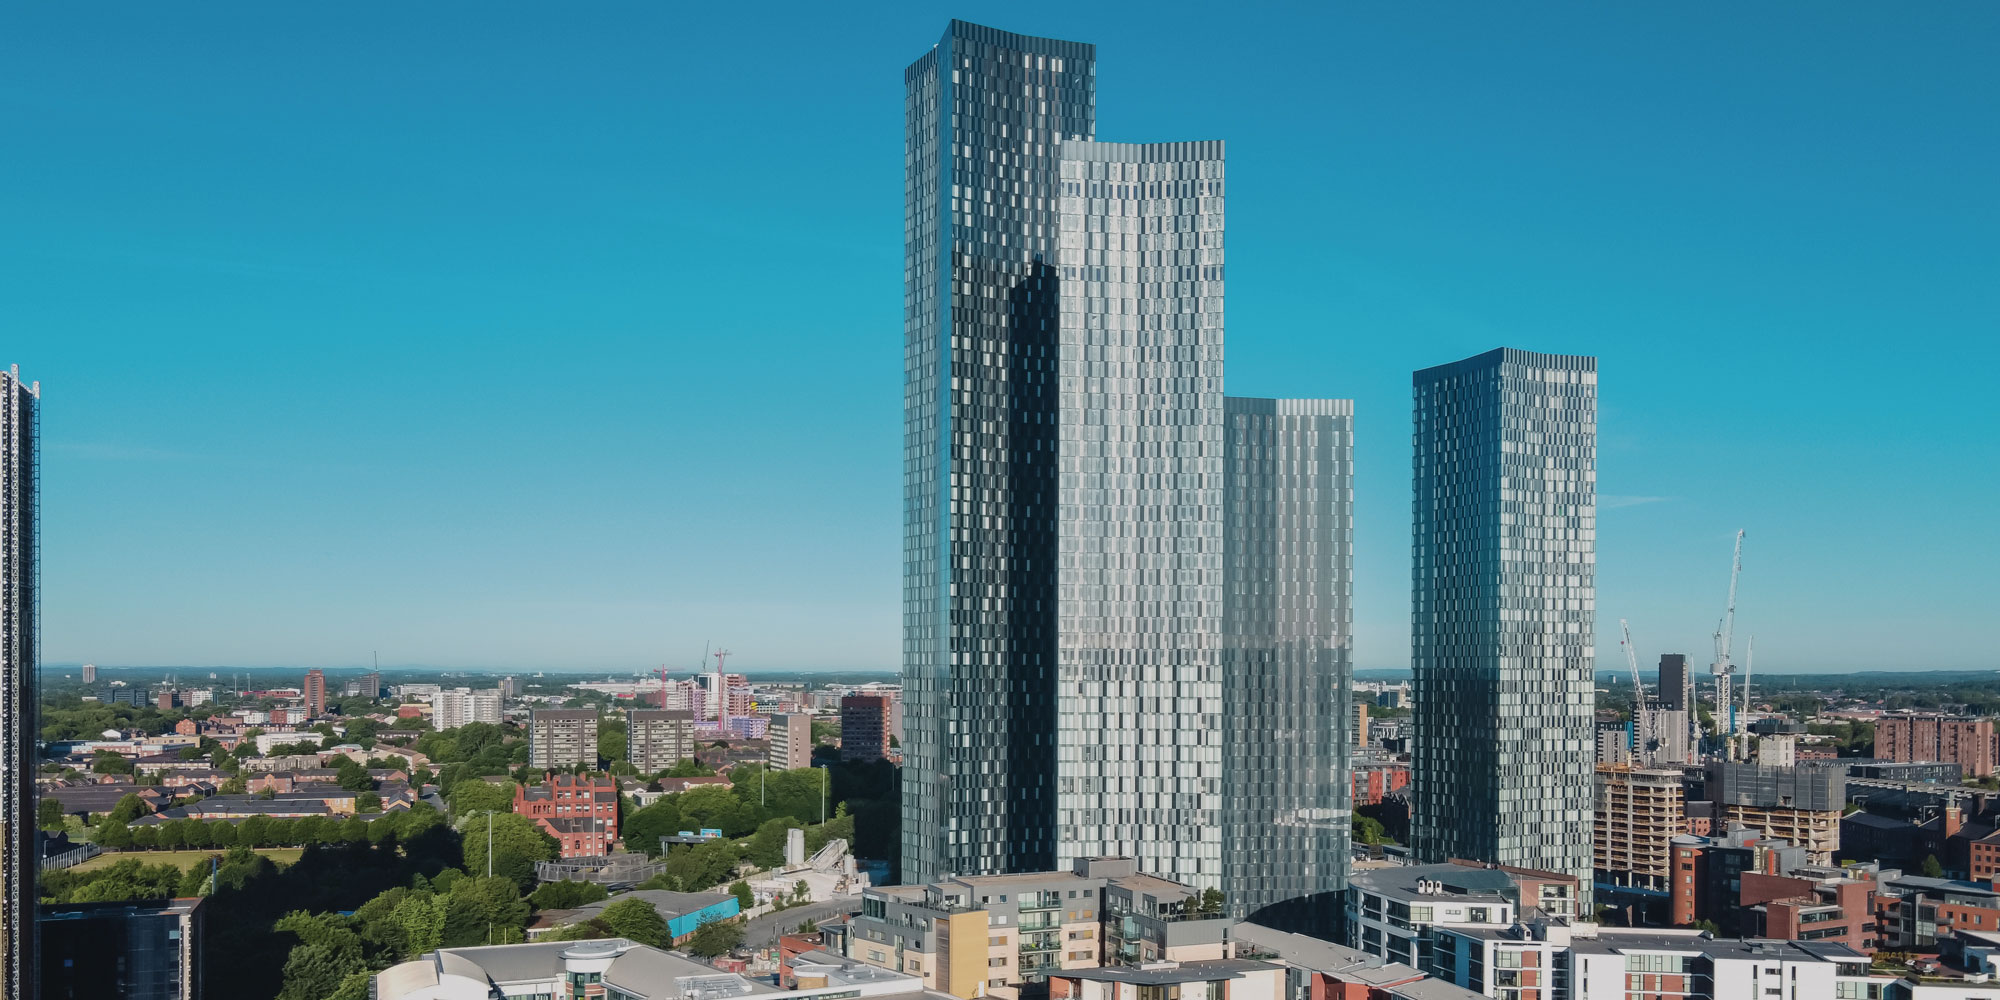 Manchester city centre skyscrapers